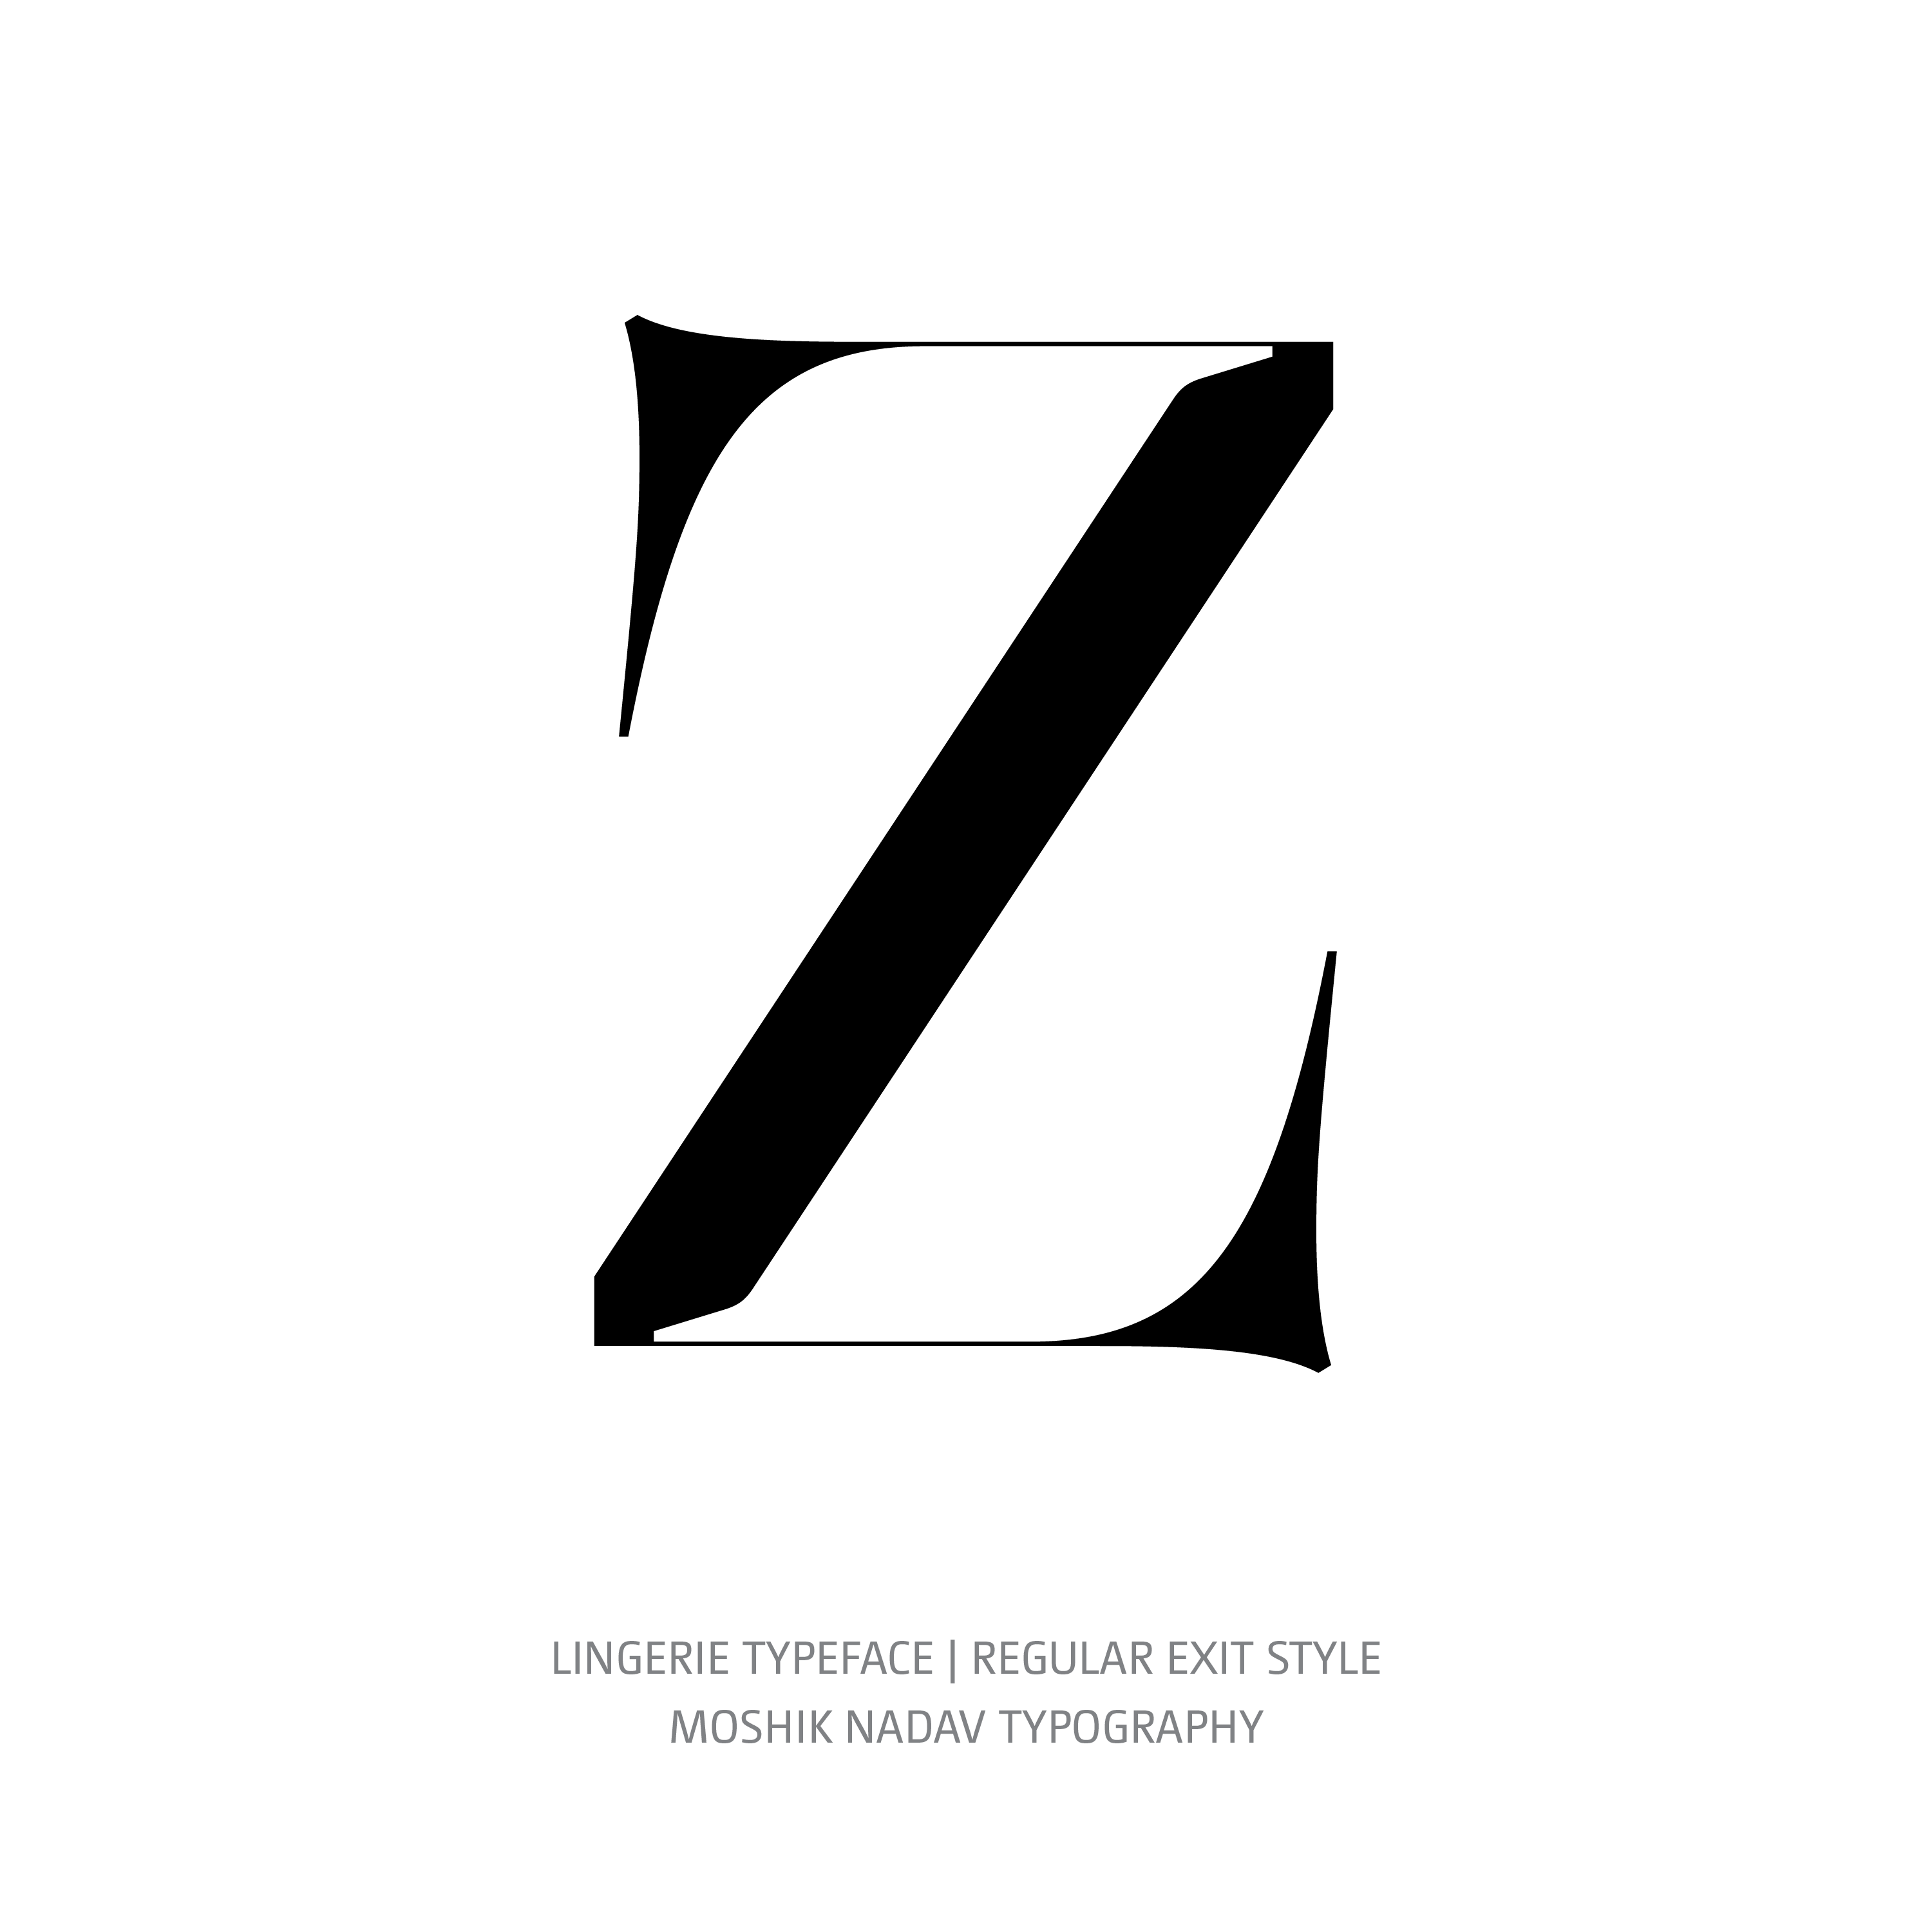 Lingerie Typeface Regular Exit Z